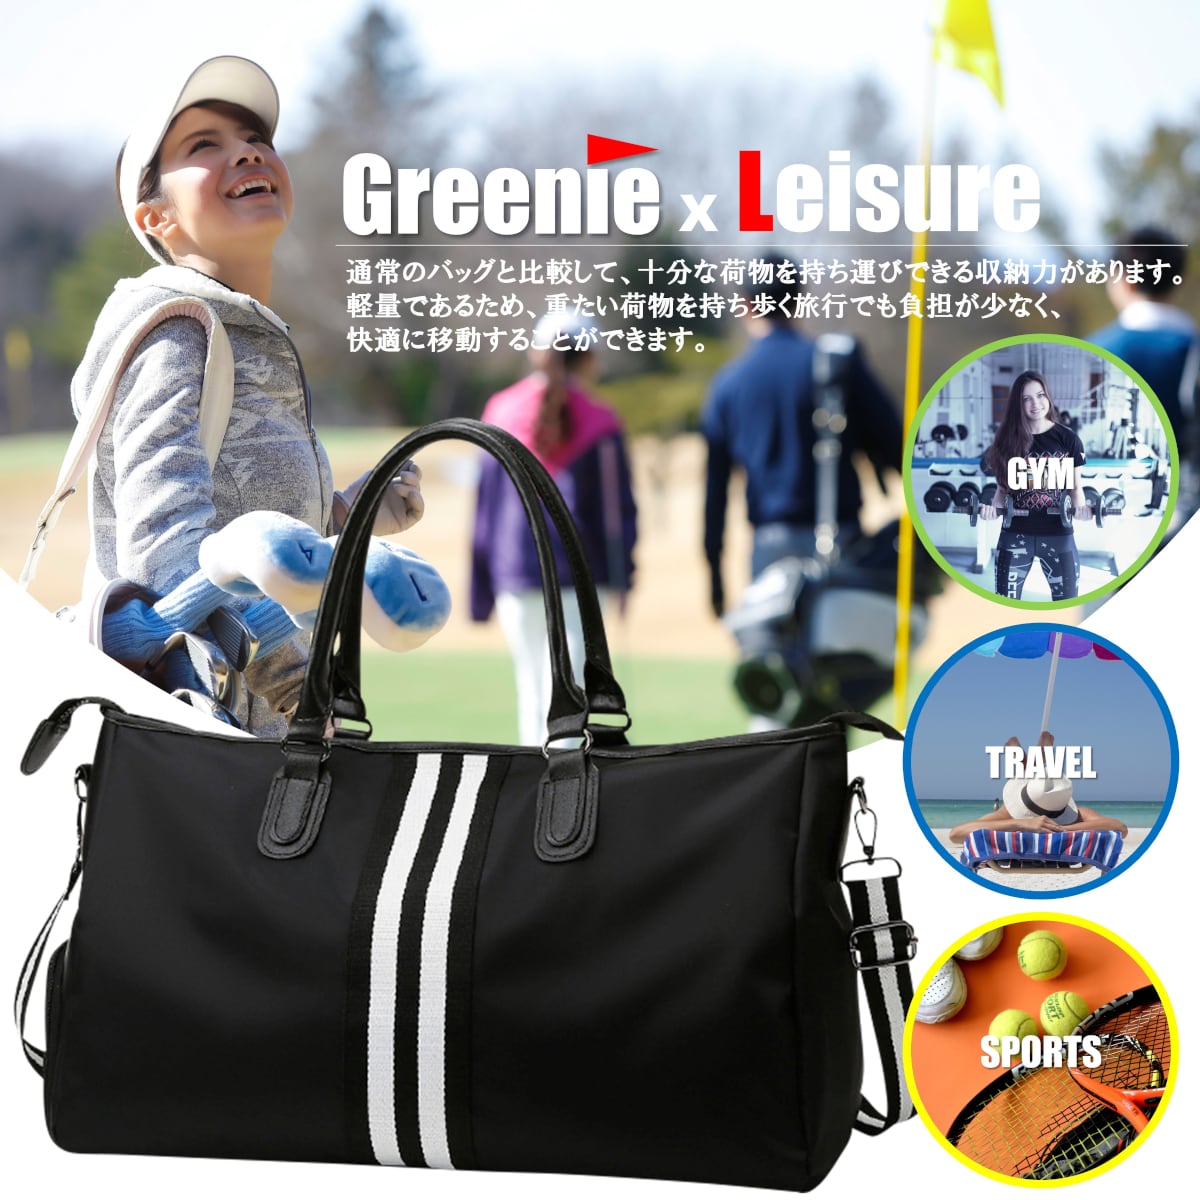 Greenie（グリーニー） ボストンバッグ バッグ ストライプ PUレザー 大容量 27L 30L 機内持ち込み ゴルフ ビジネス 出張 旅行  スポーツ ジム 修学旅行 メンズ レディース バッグインバッグ バッグハンガー GR-2306-01